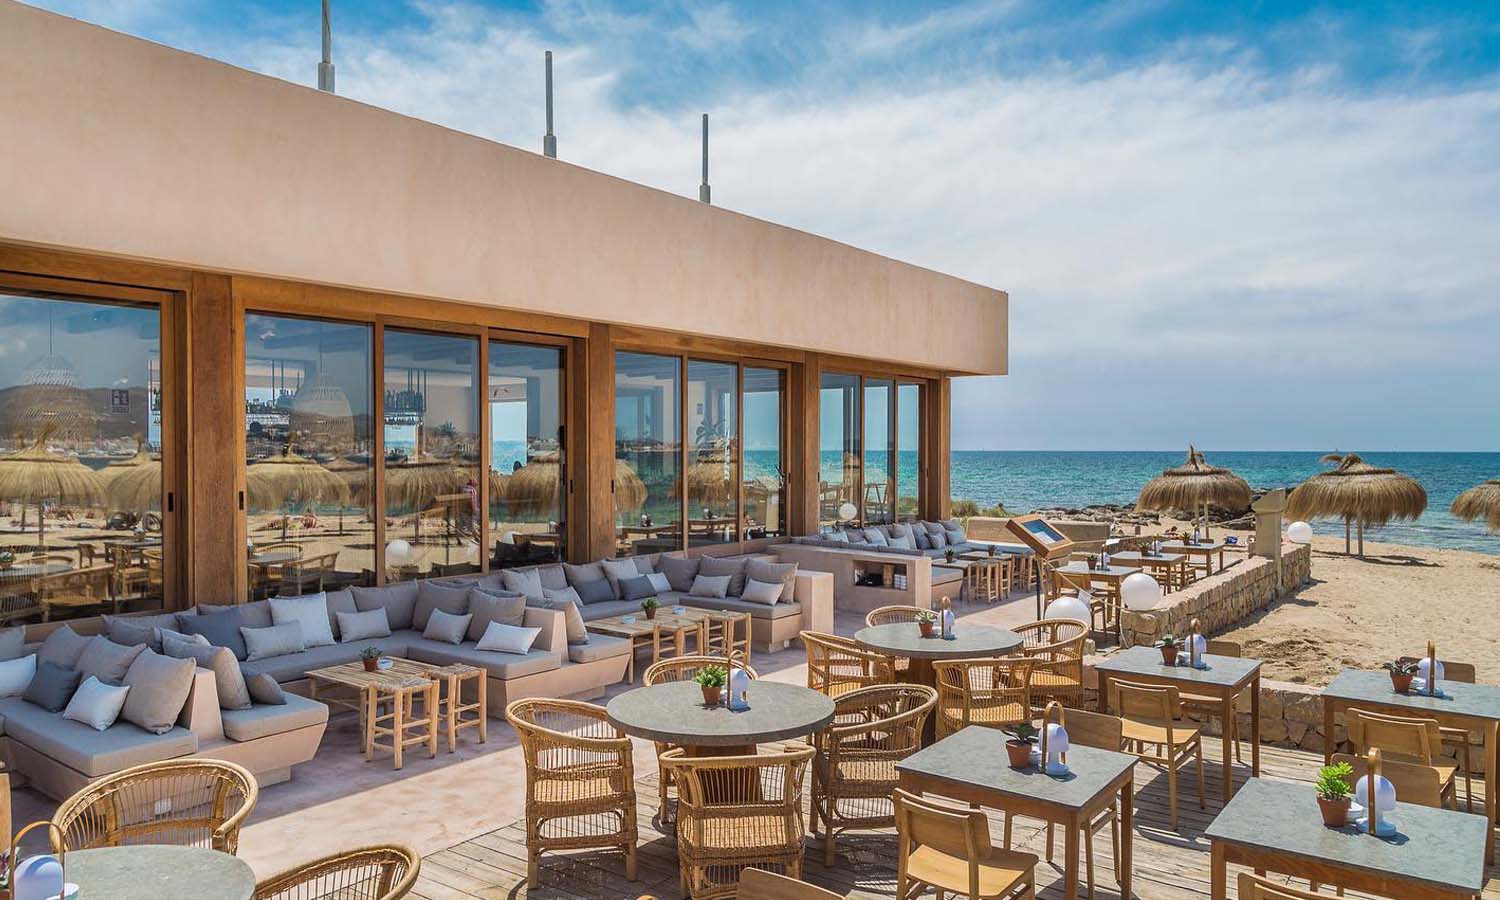 Top 3 beach restaurants near Palma restaurantes playa ASSAONA NAKAR HOTEL